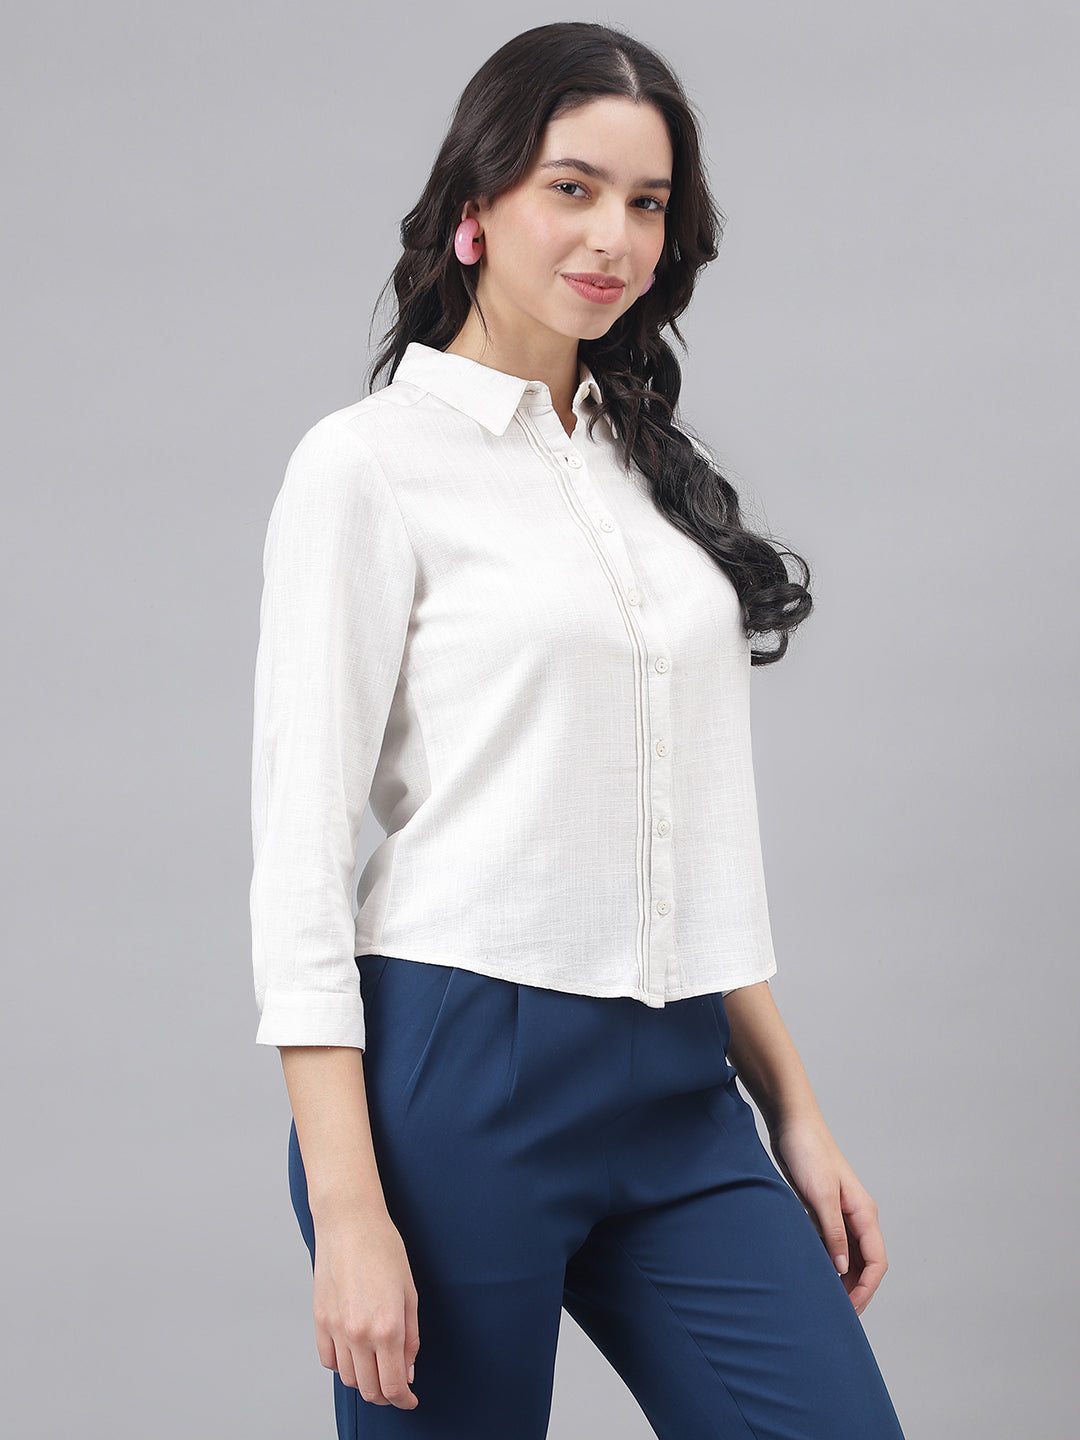 White 3/4 Sleeve Shirt Collar Women Solid Top